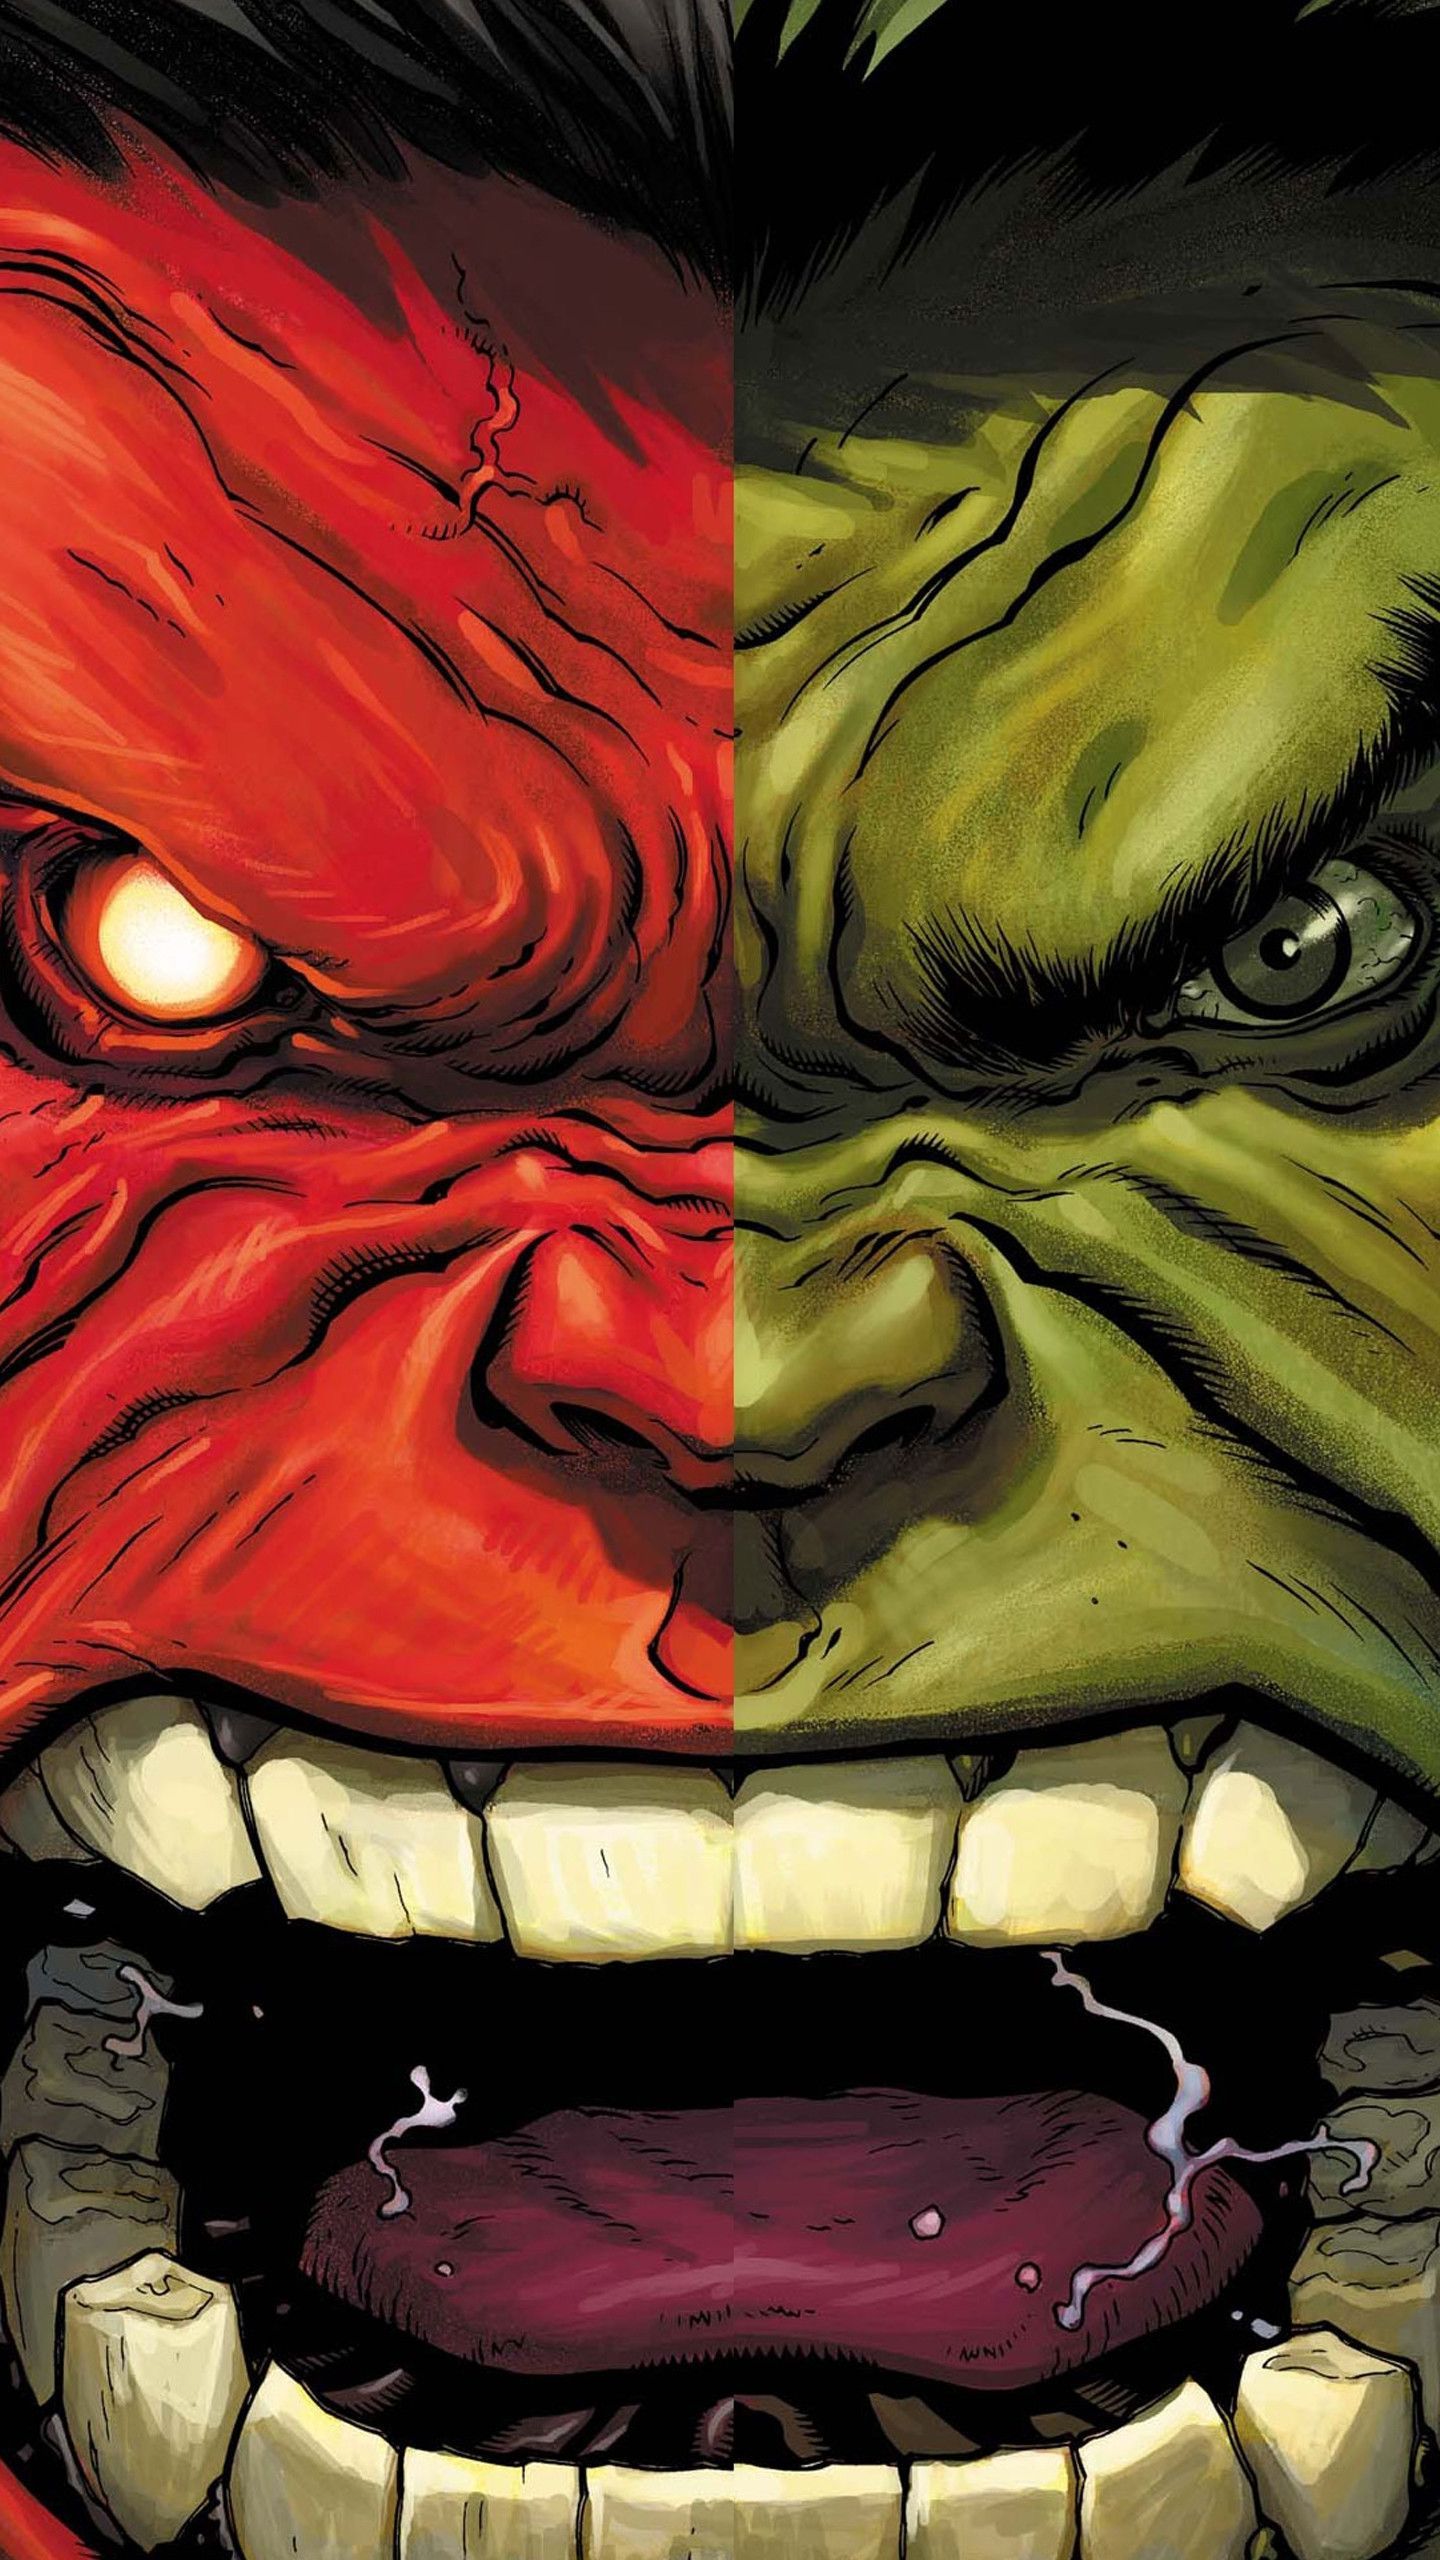 Angry Hulk #comics #marvel #dc #comicbooks. iPhone 5